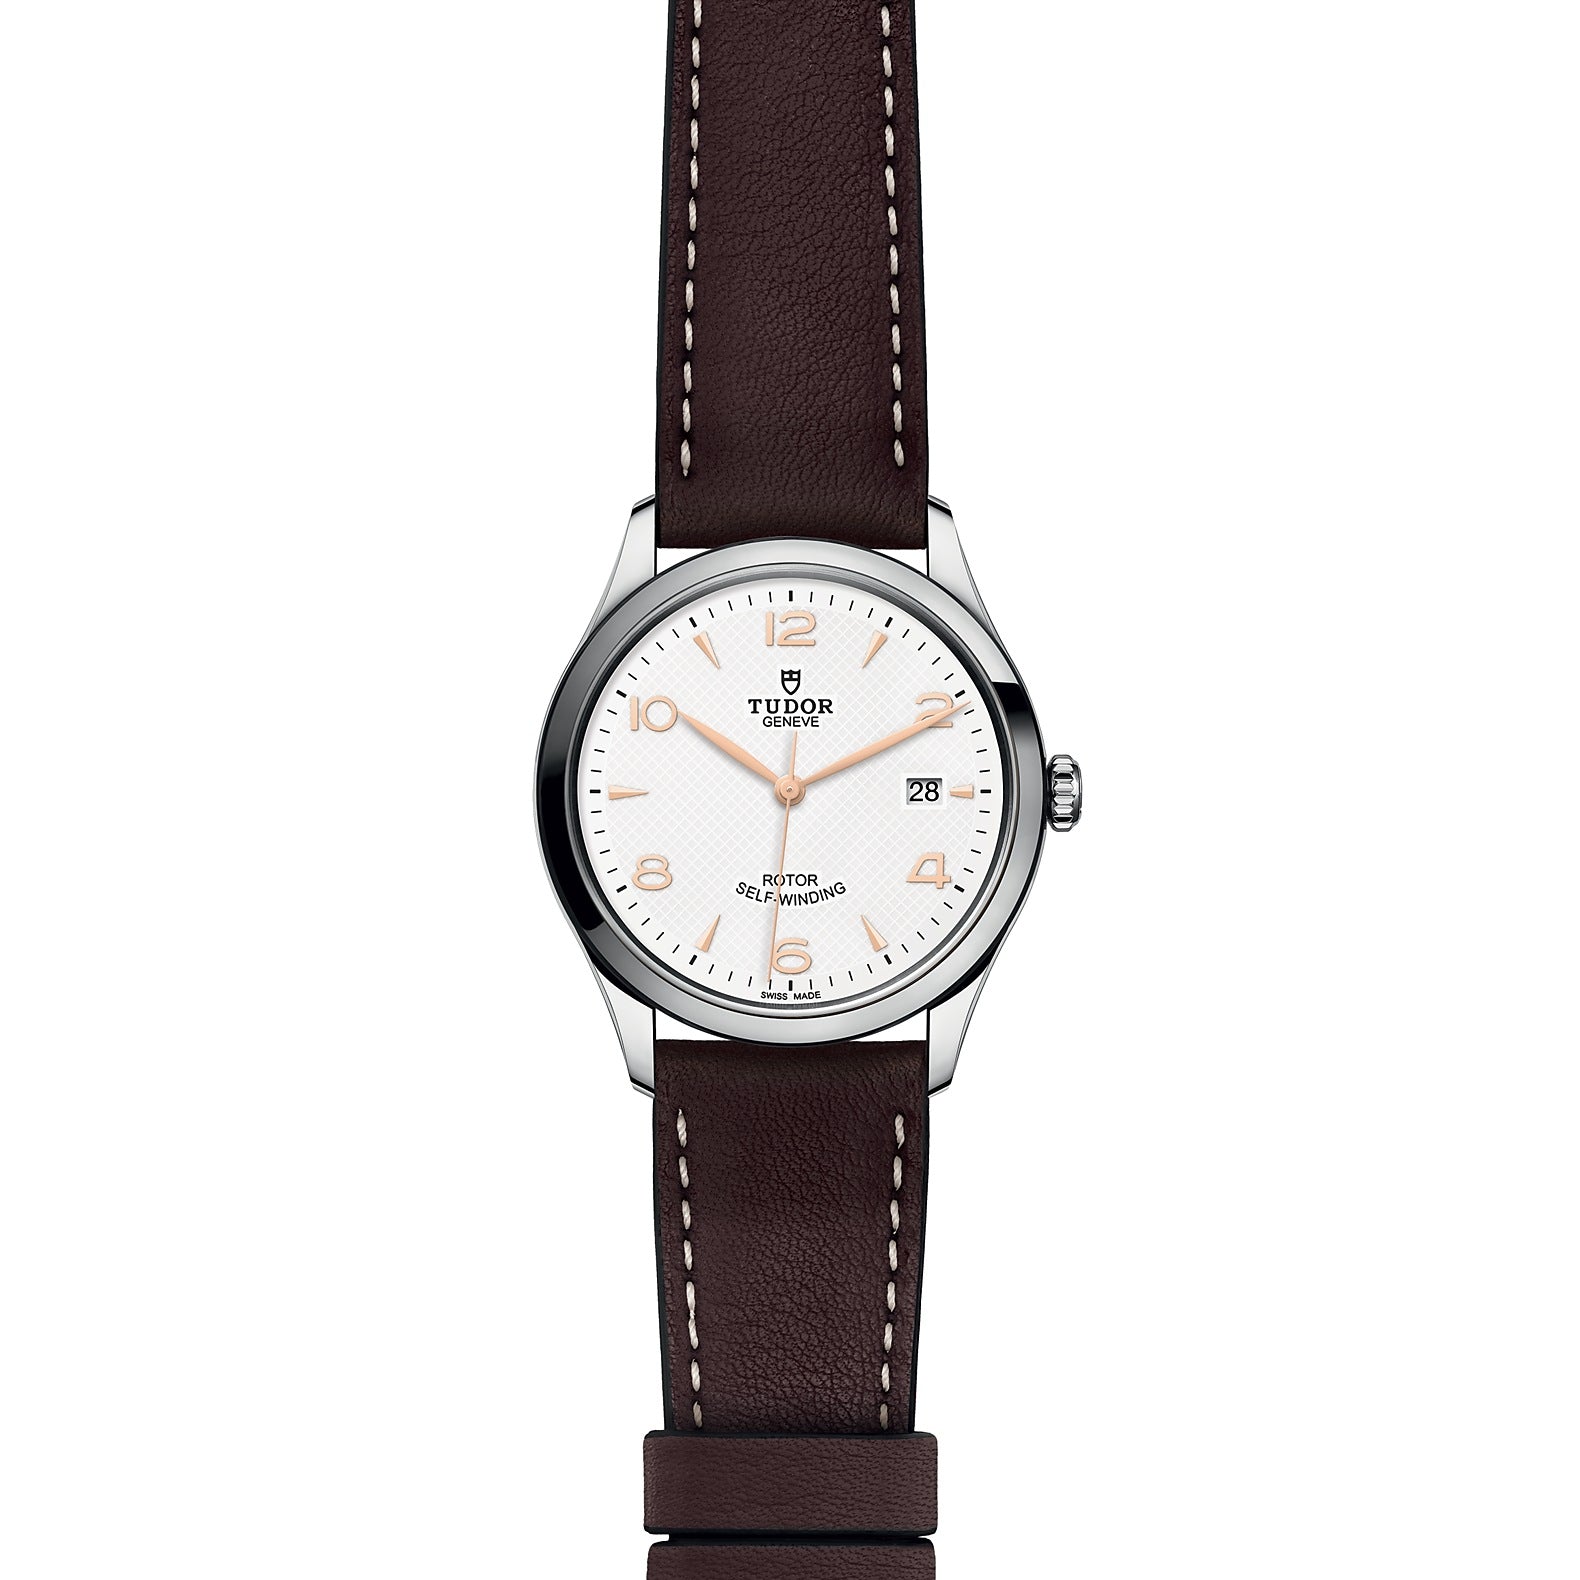 Tudor 1926 Watch, 39mm White Dial, M91550-0012